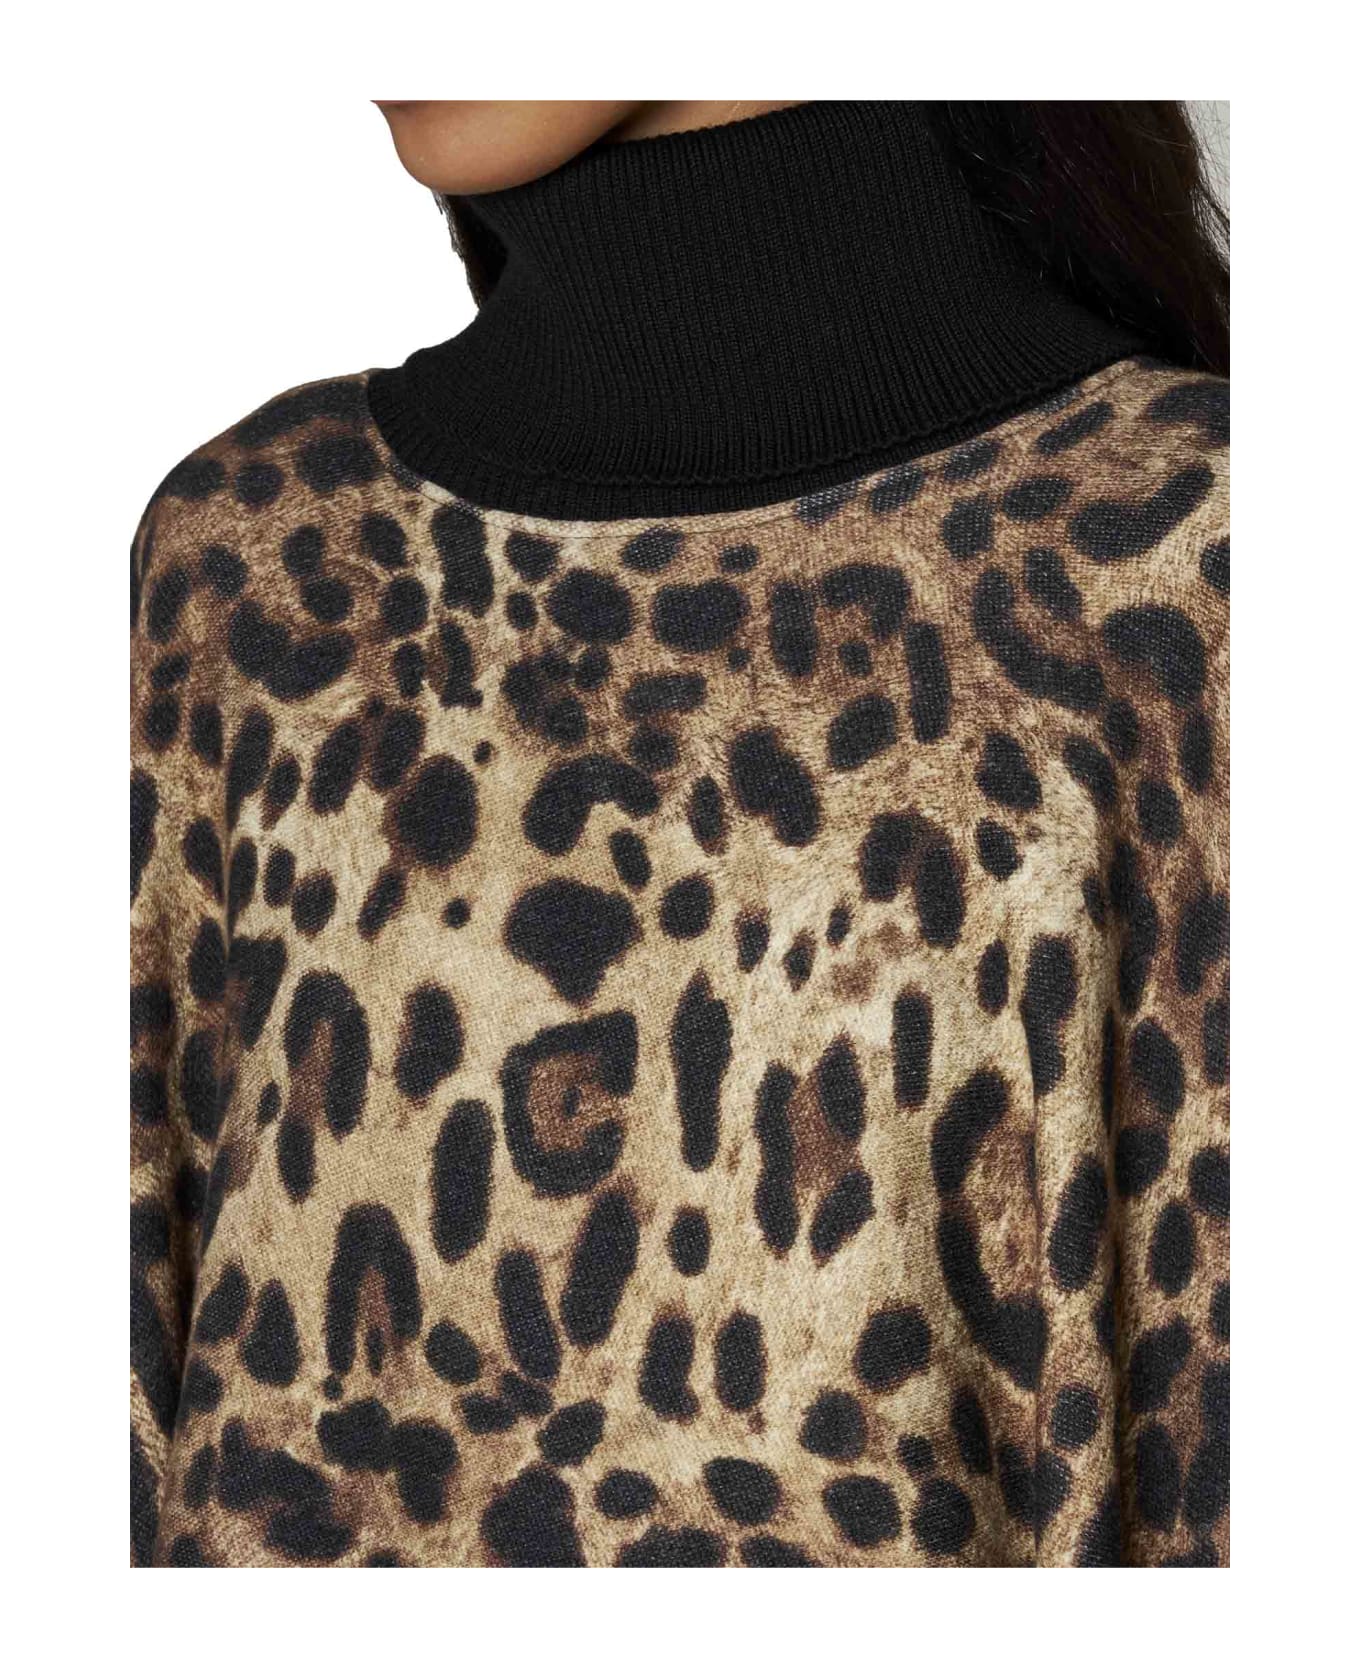 Dolce & Gabbana Leopard Printed Fringed Poncho - Leo コート